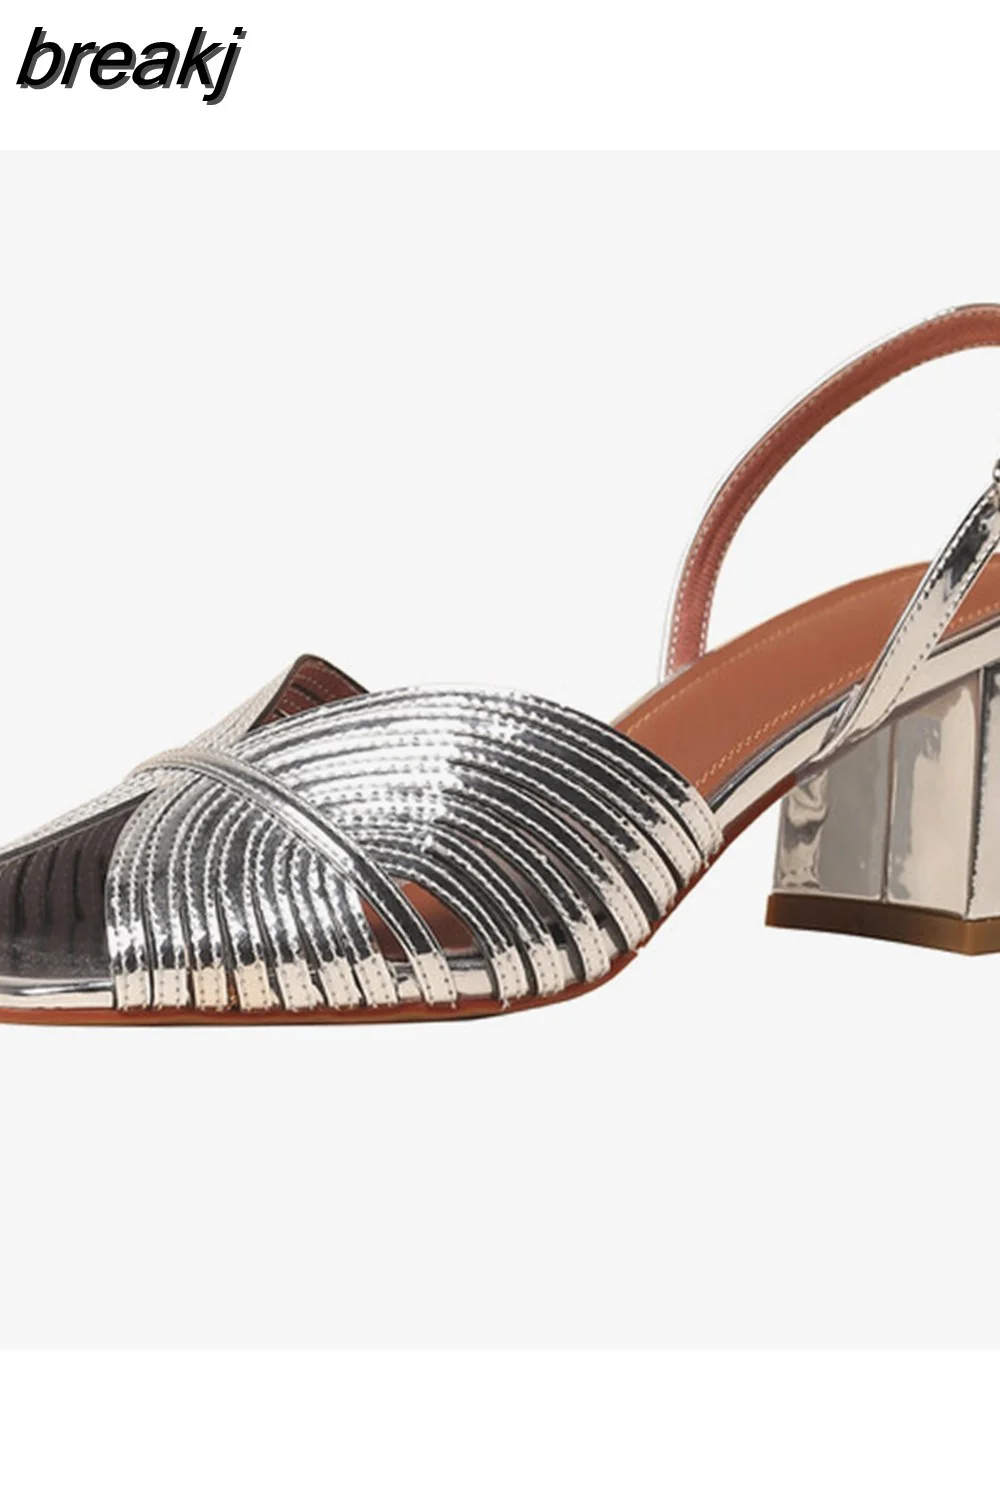 breakj Size 34-39 Women Sandals Rome Leather High Heels Summer Shoes For Women 2023 Trend Open Toe Elegant Heeled Sandals